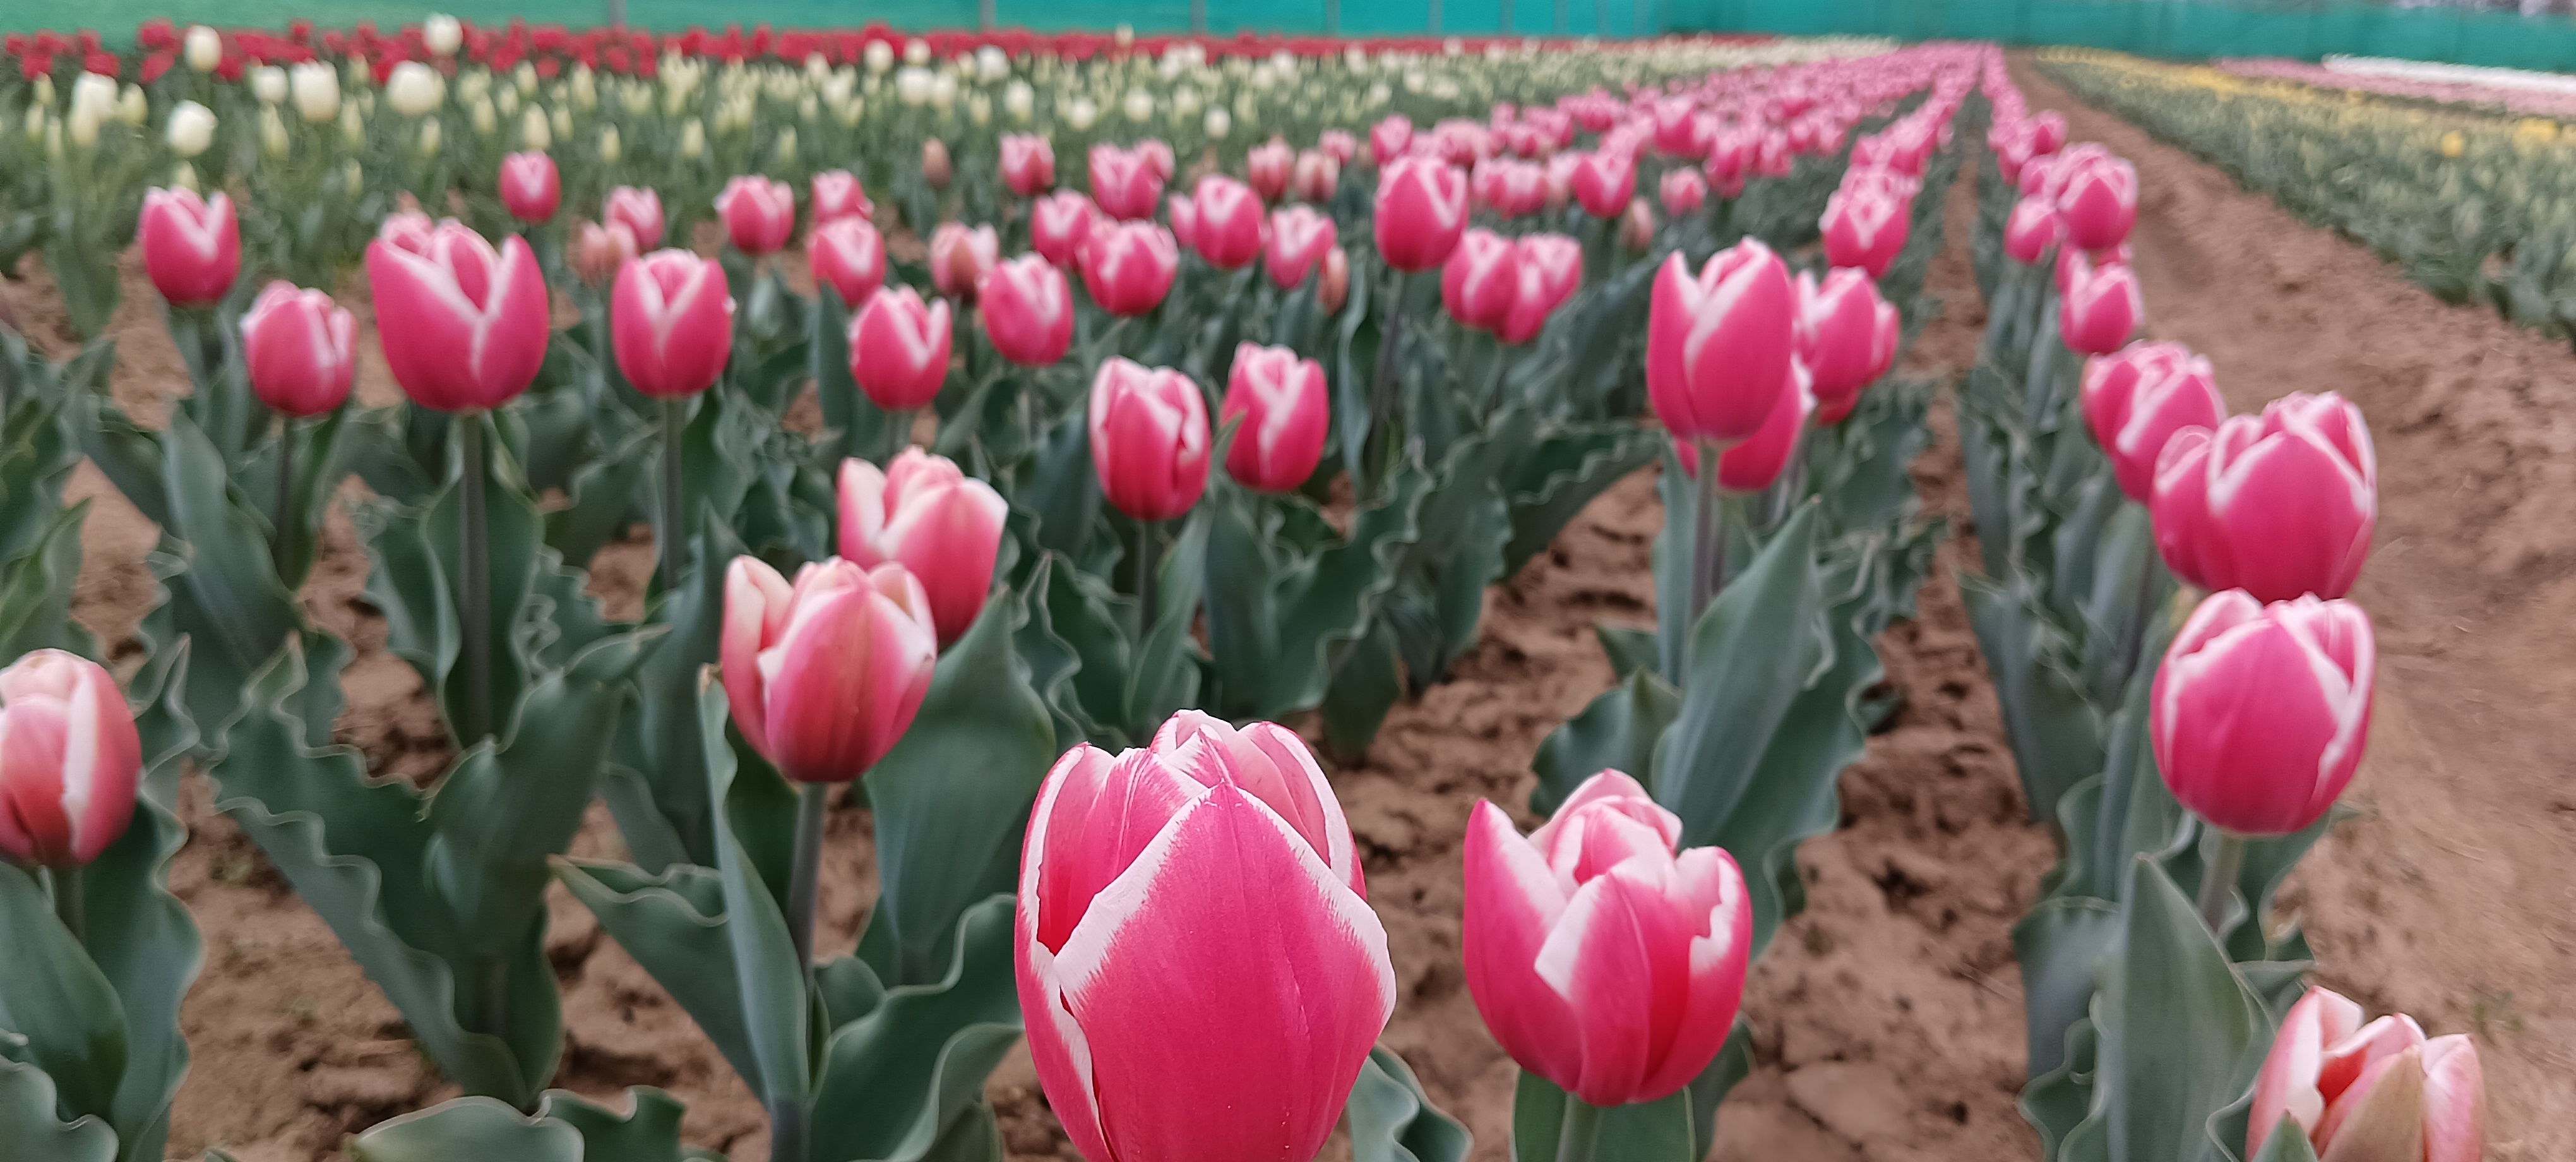 Tulip varieties